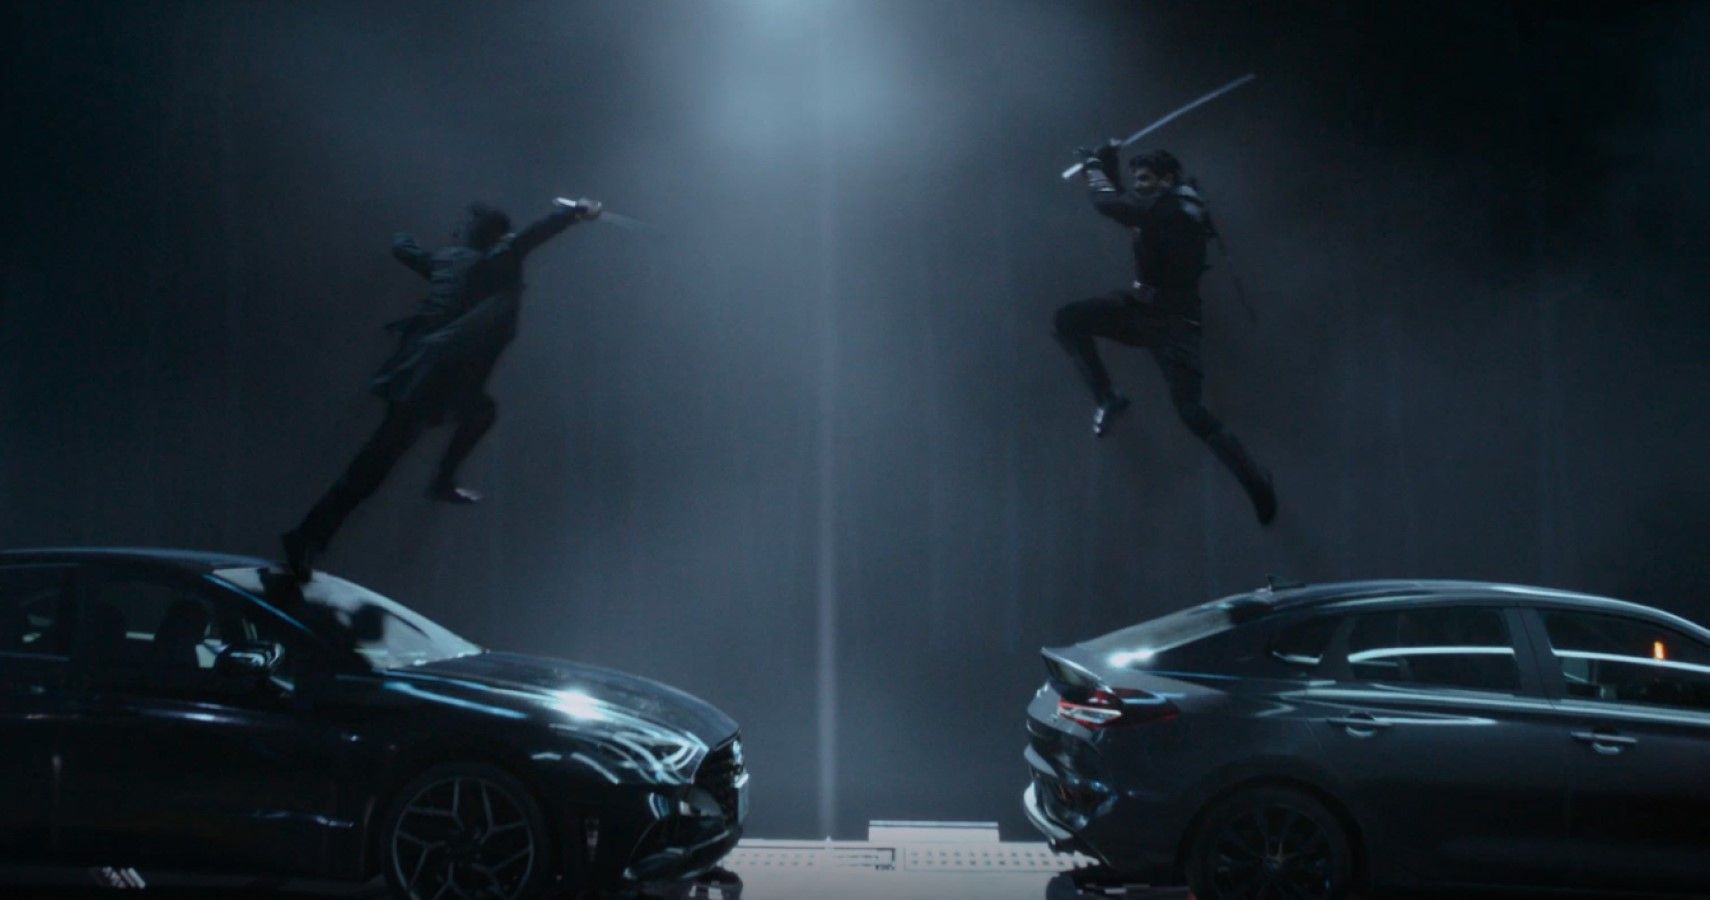 Action scene grab from Snake Eyes: G.I. Joe Origins with Hyundai Sonata N Line